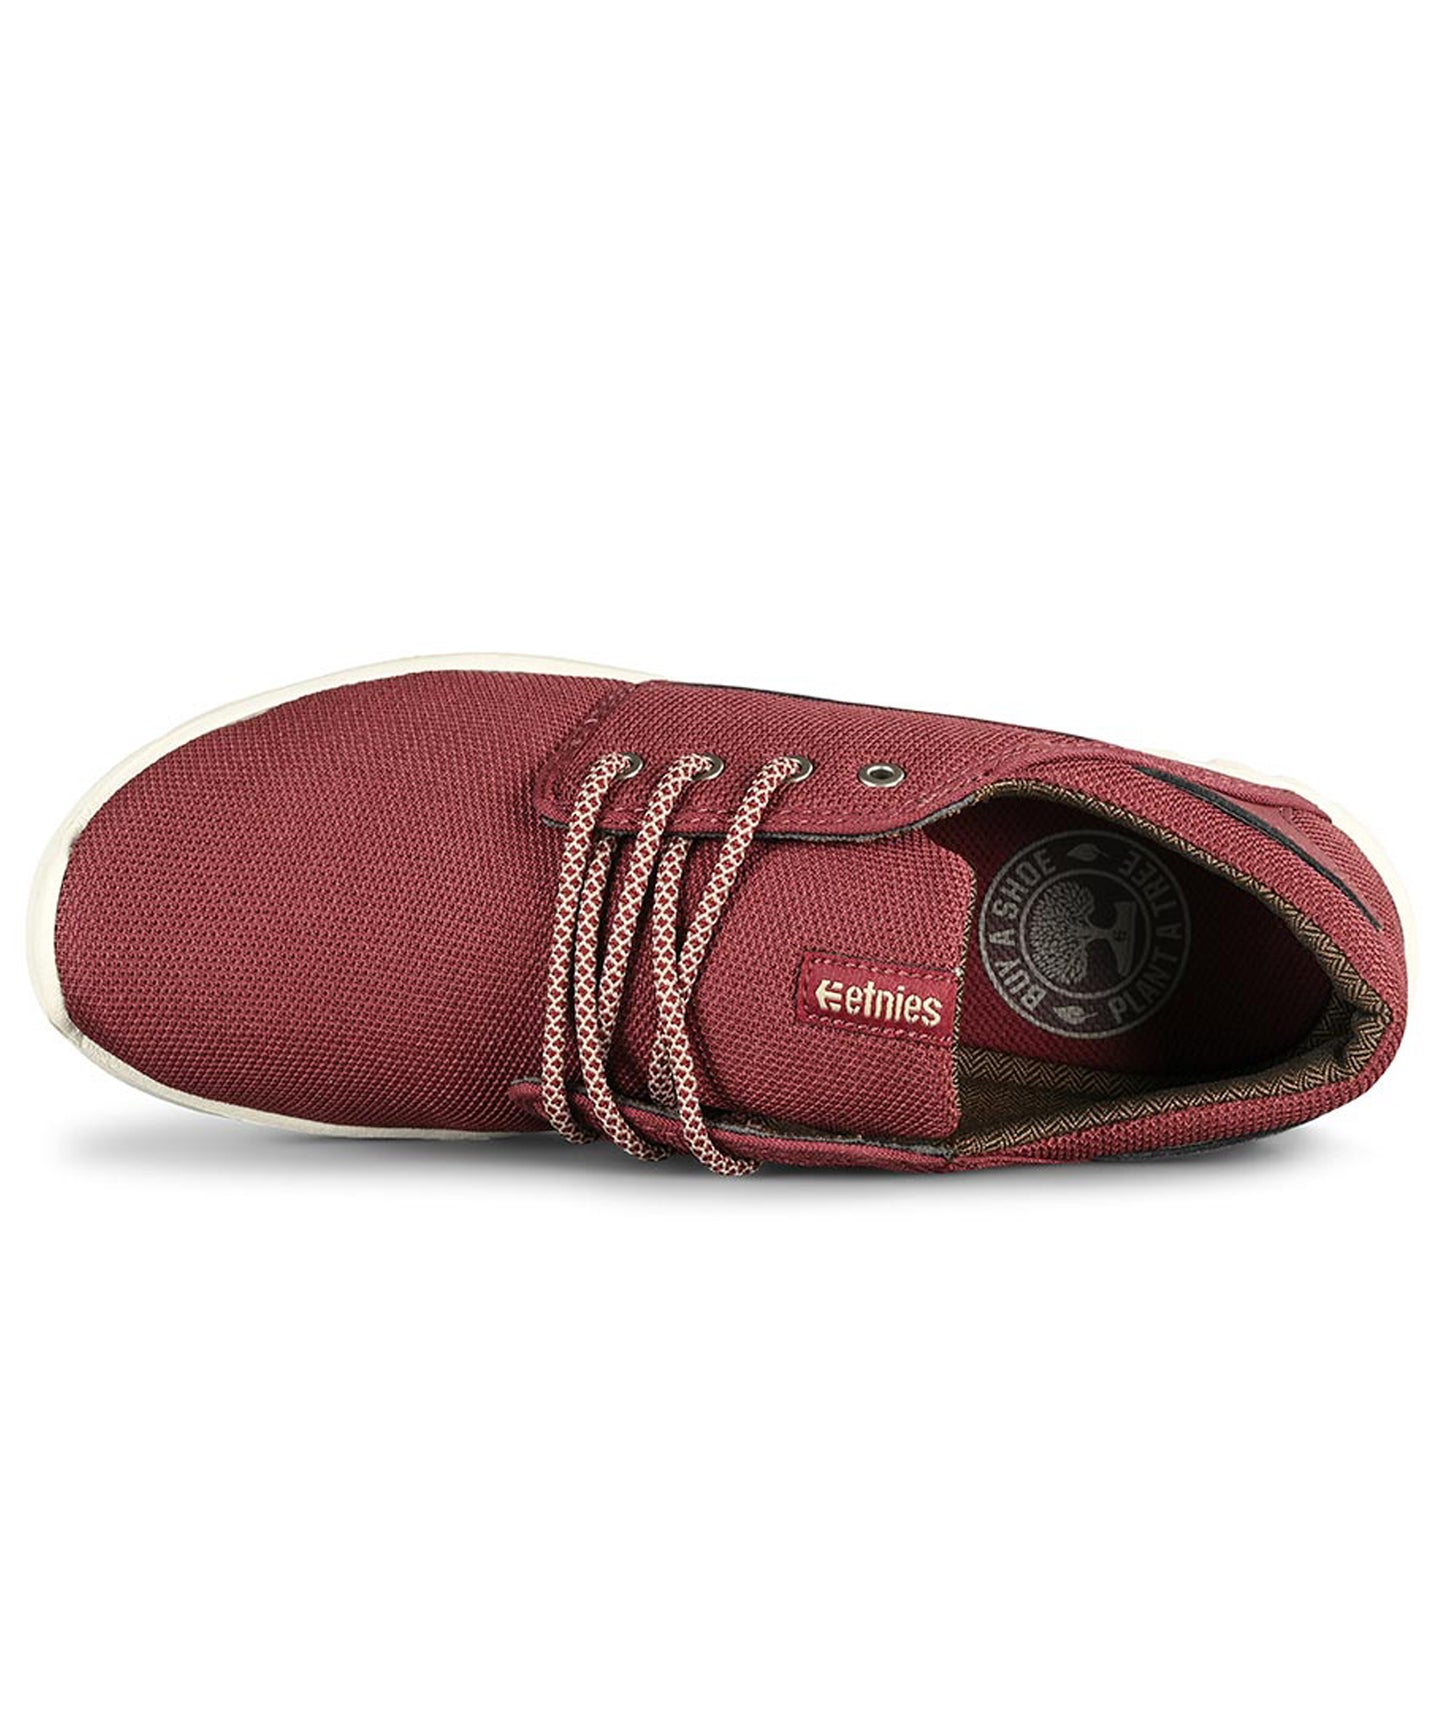 etnies-zapatillas-scout-burgundy-color granate-ligera-extremadamente comoda-malla transpirable-interior totalmente forrado-suela sti.